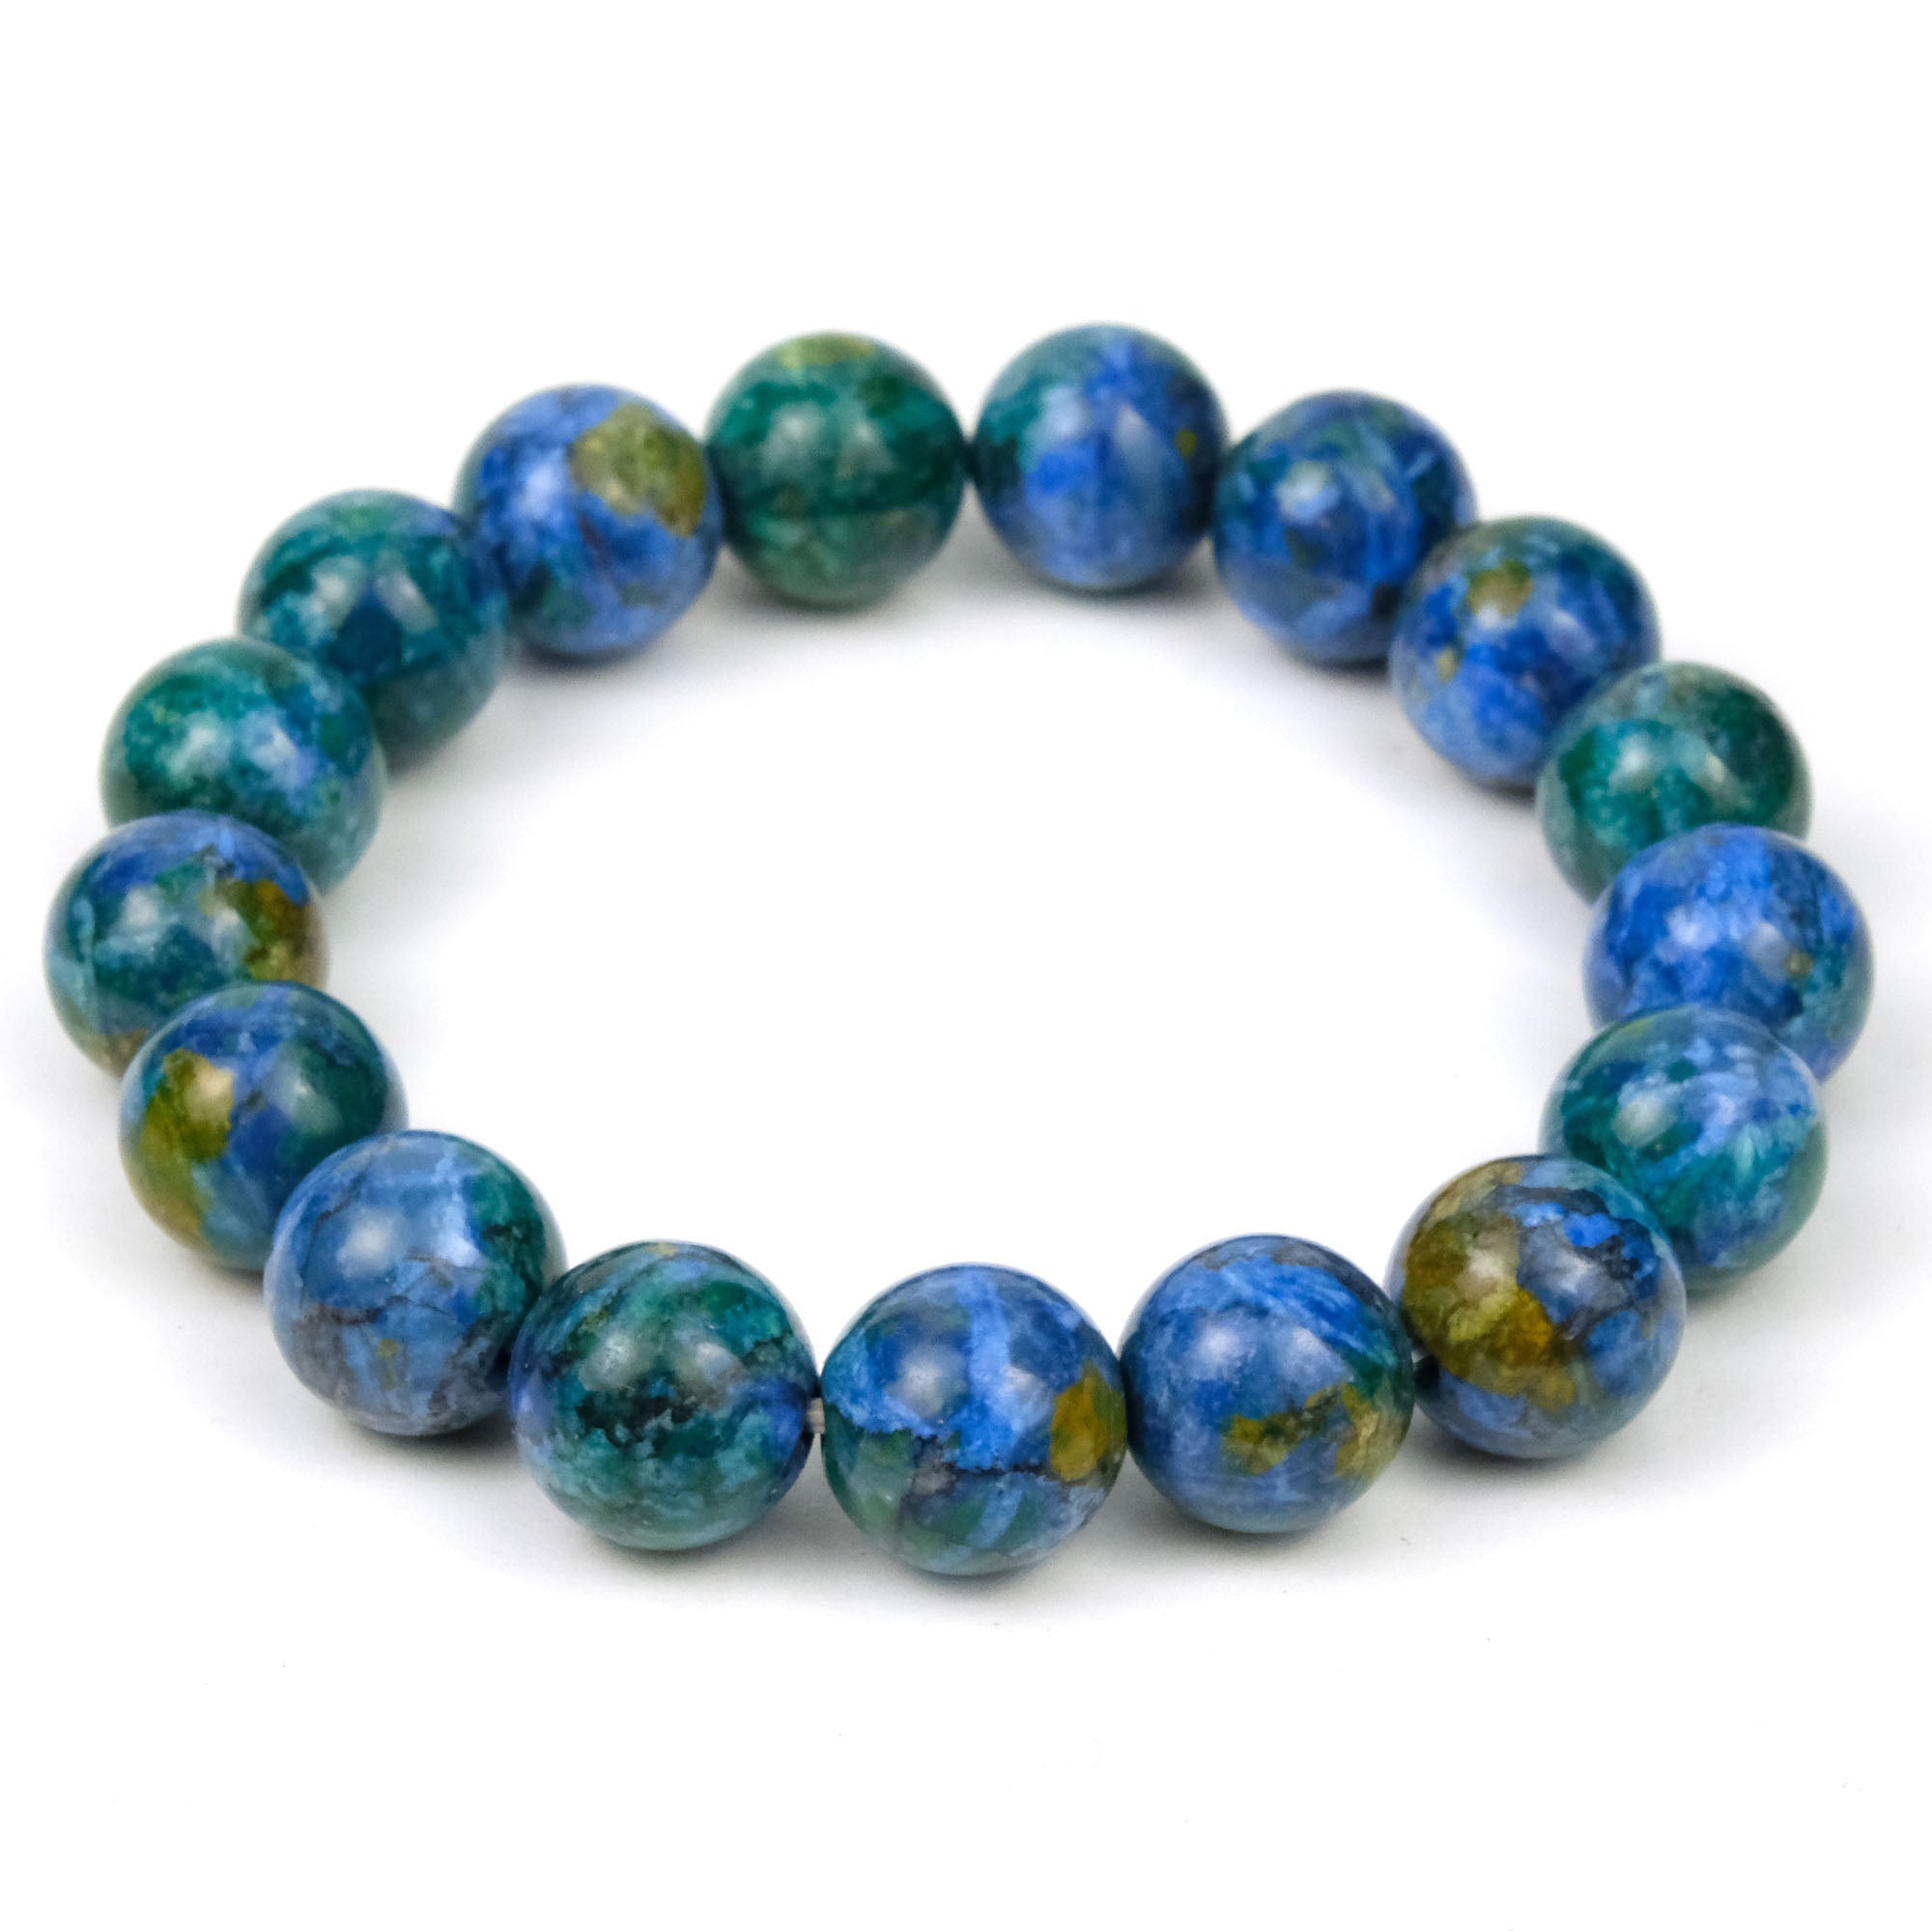 Natural Azurite Crystal Bead Bracelet Fashionable Healing Stone For Women  Gemstone Bracelets Jewelry Gift From Zhangliangliu, $44.72 | DHgate.Com